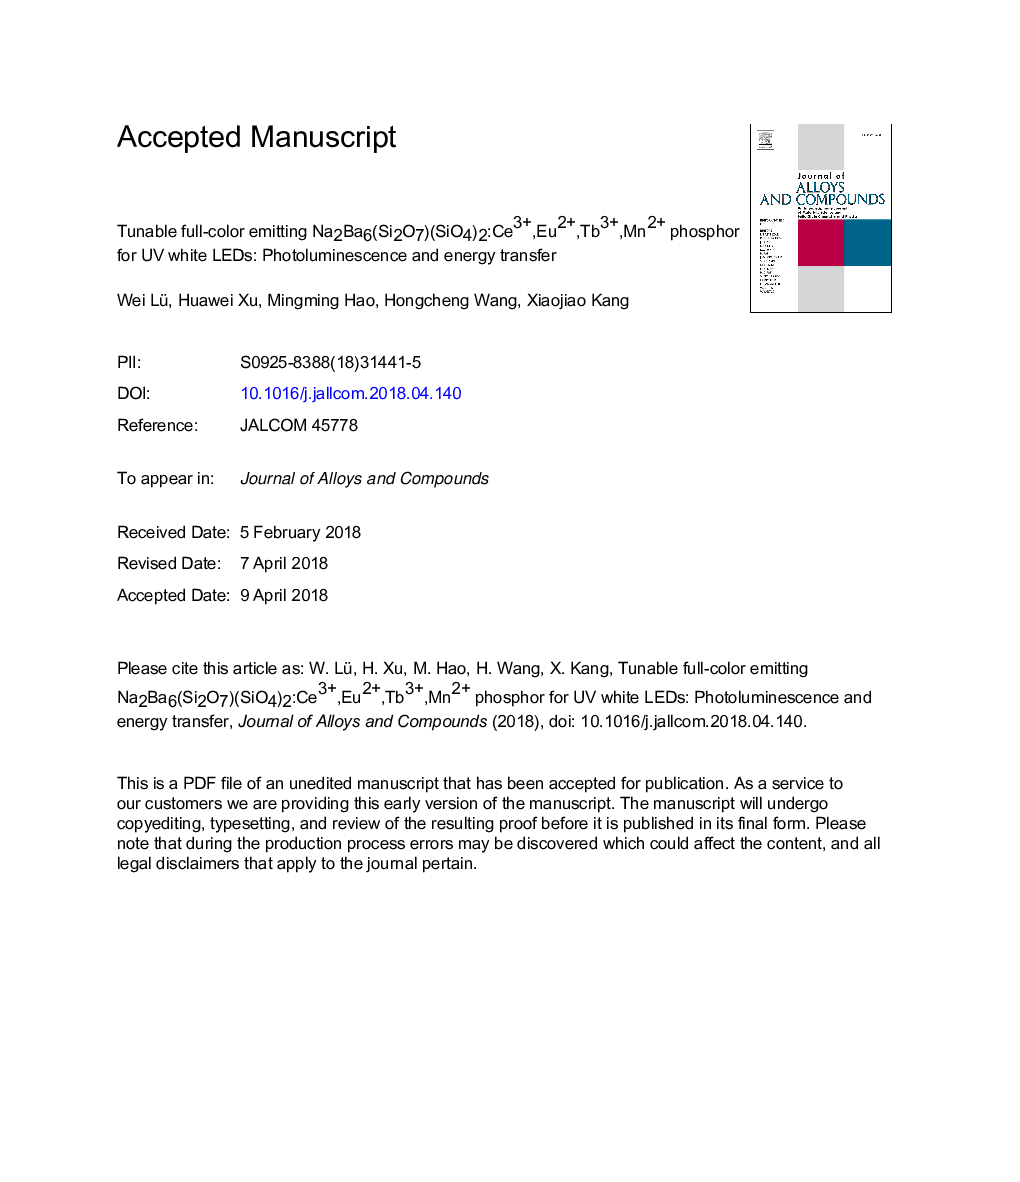 Tunable full-color emitting Na2Ba6(Si2O7)(SiO4)2:Ce3+,Eu2+,Tb3+,Mn2+ phosphor for UV white LEDs: Photoluminescence and energy transfer